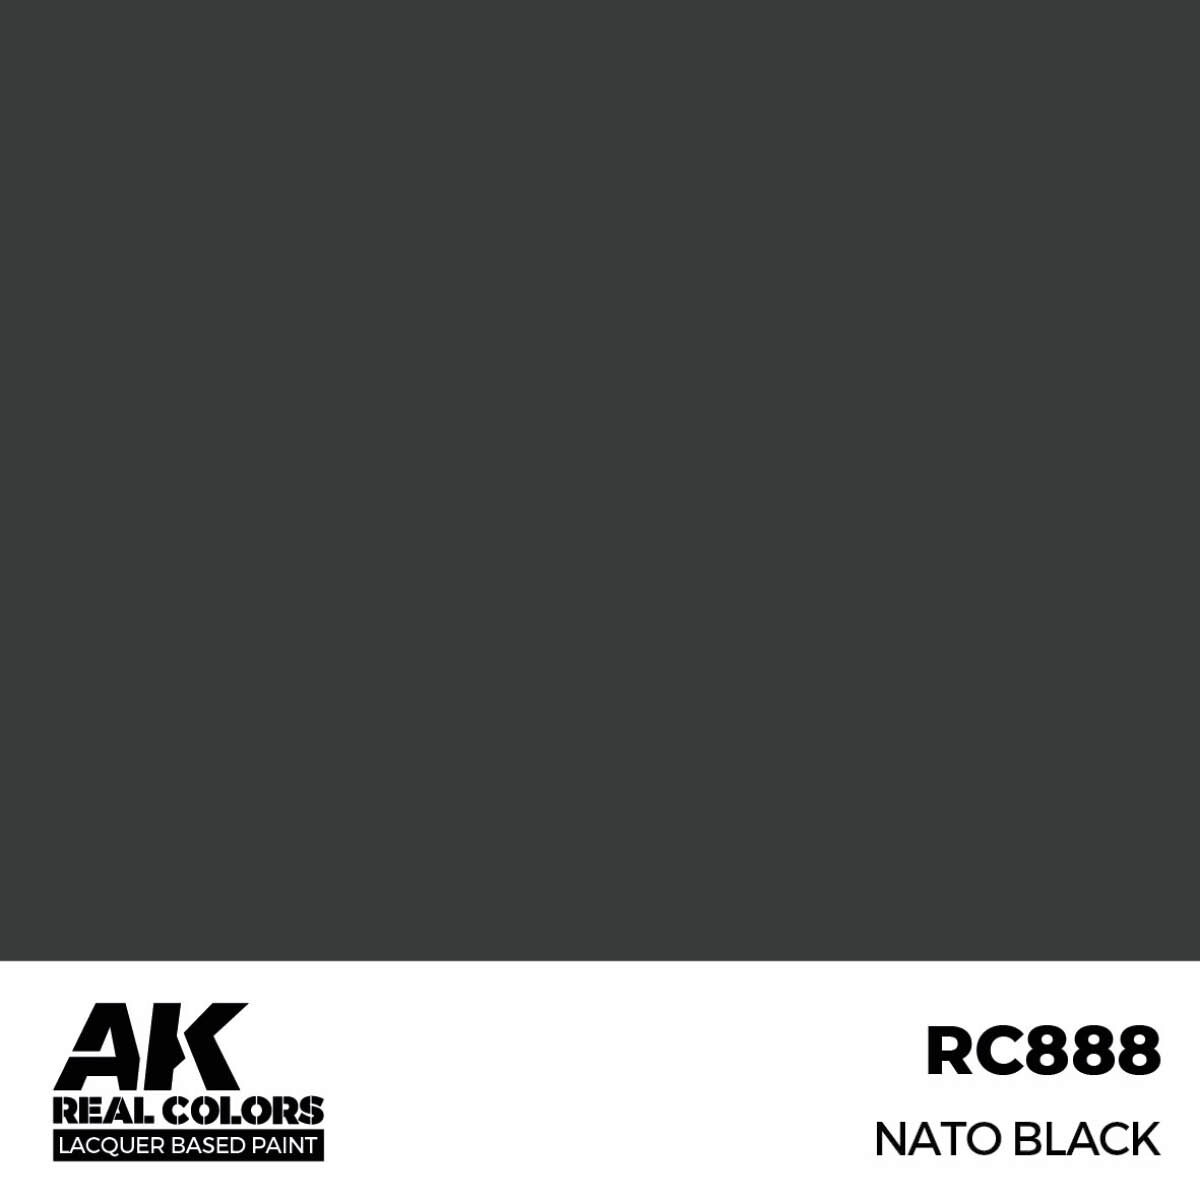 AK RC888 Real Colors NATO Black 17 ml.